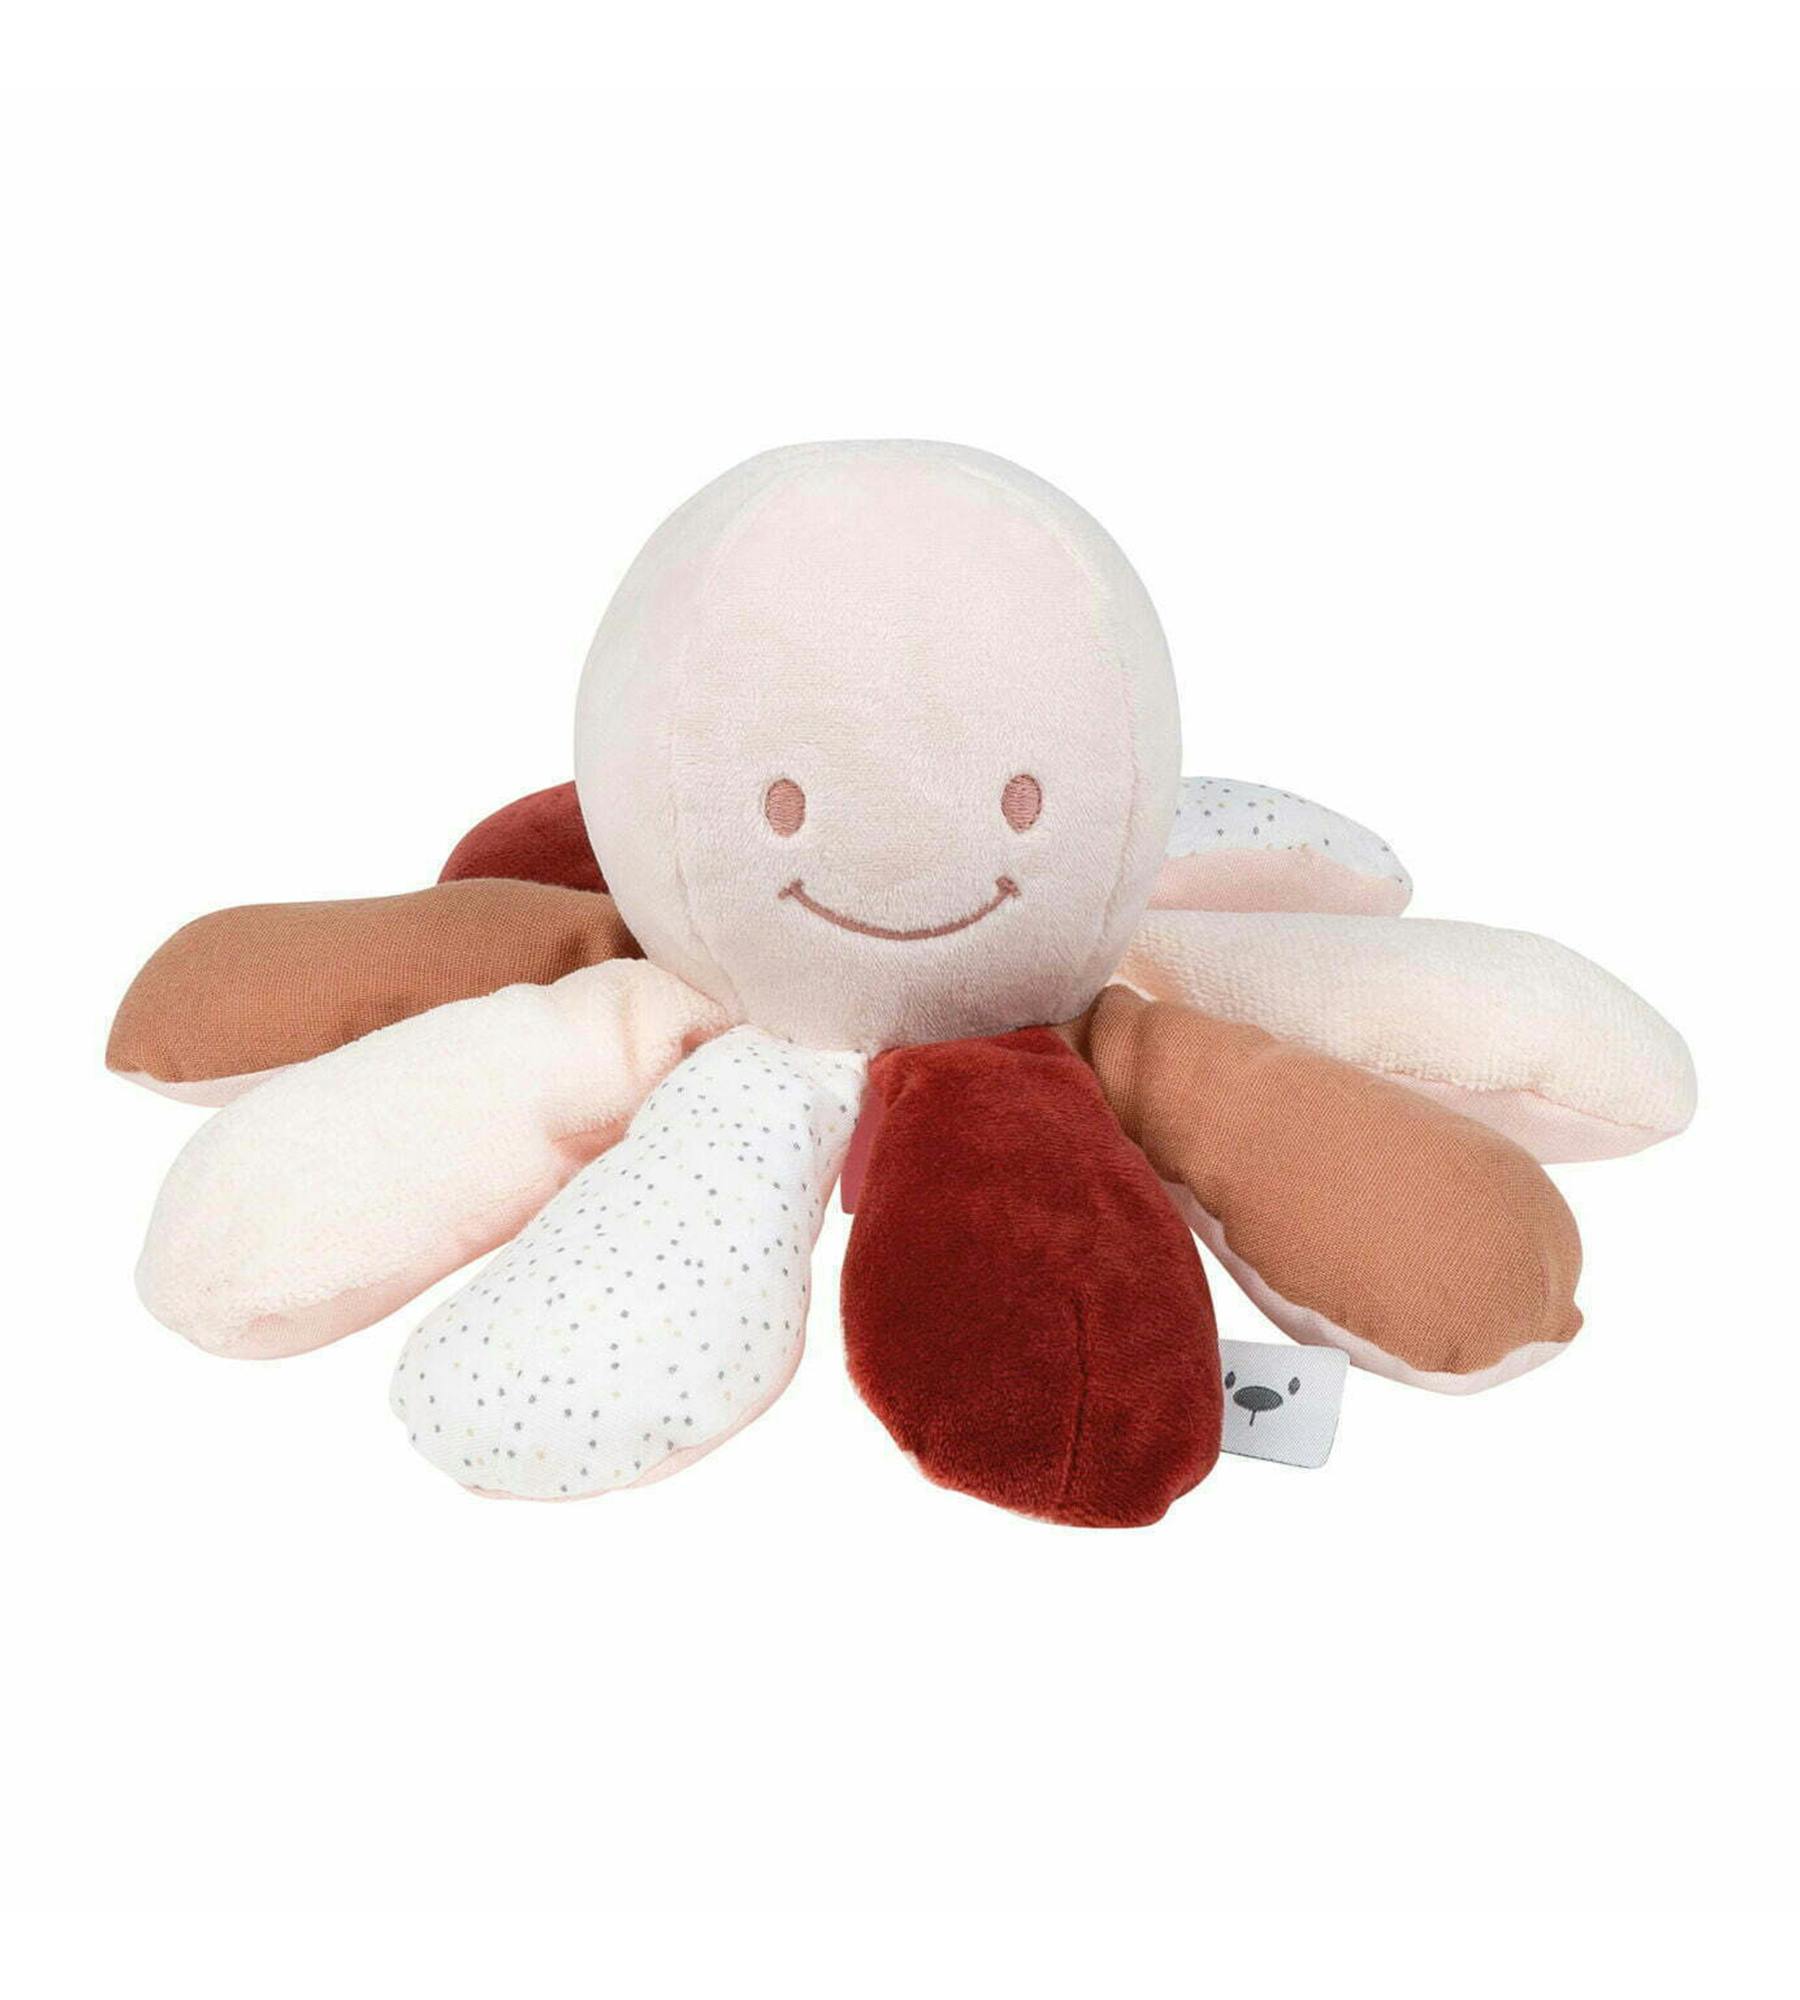 Nattou Cuddly Toys – Activity Octopus, Rust